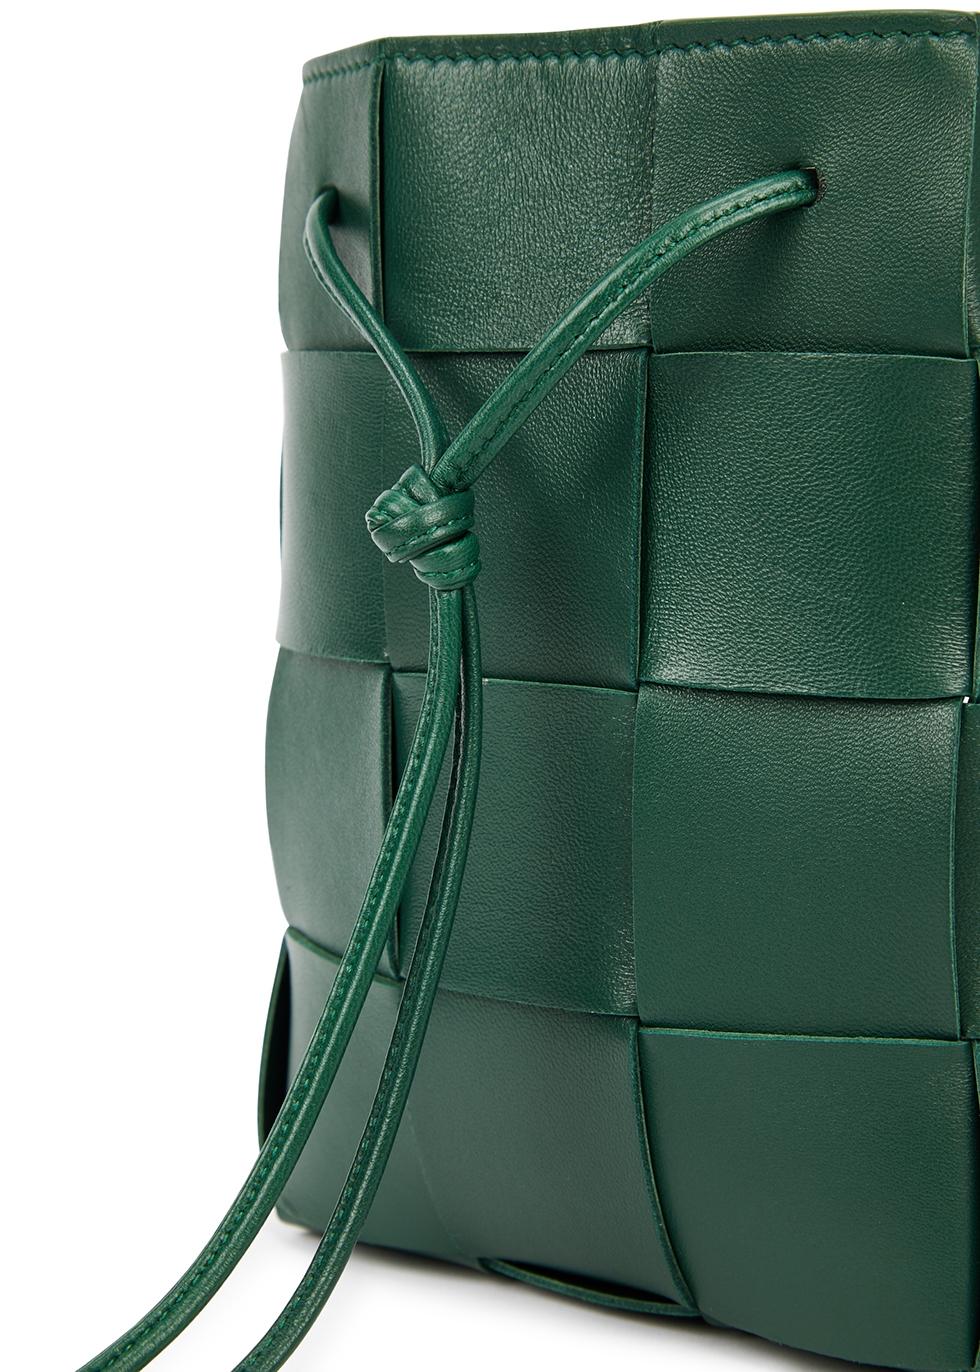 Bottega Veneta Intrecciato Small Leather Bucket Bag in Green